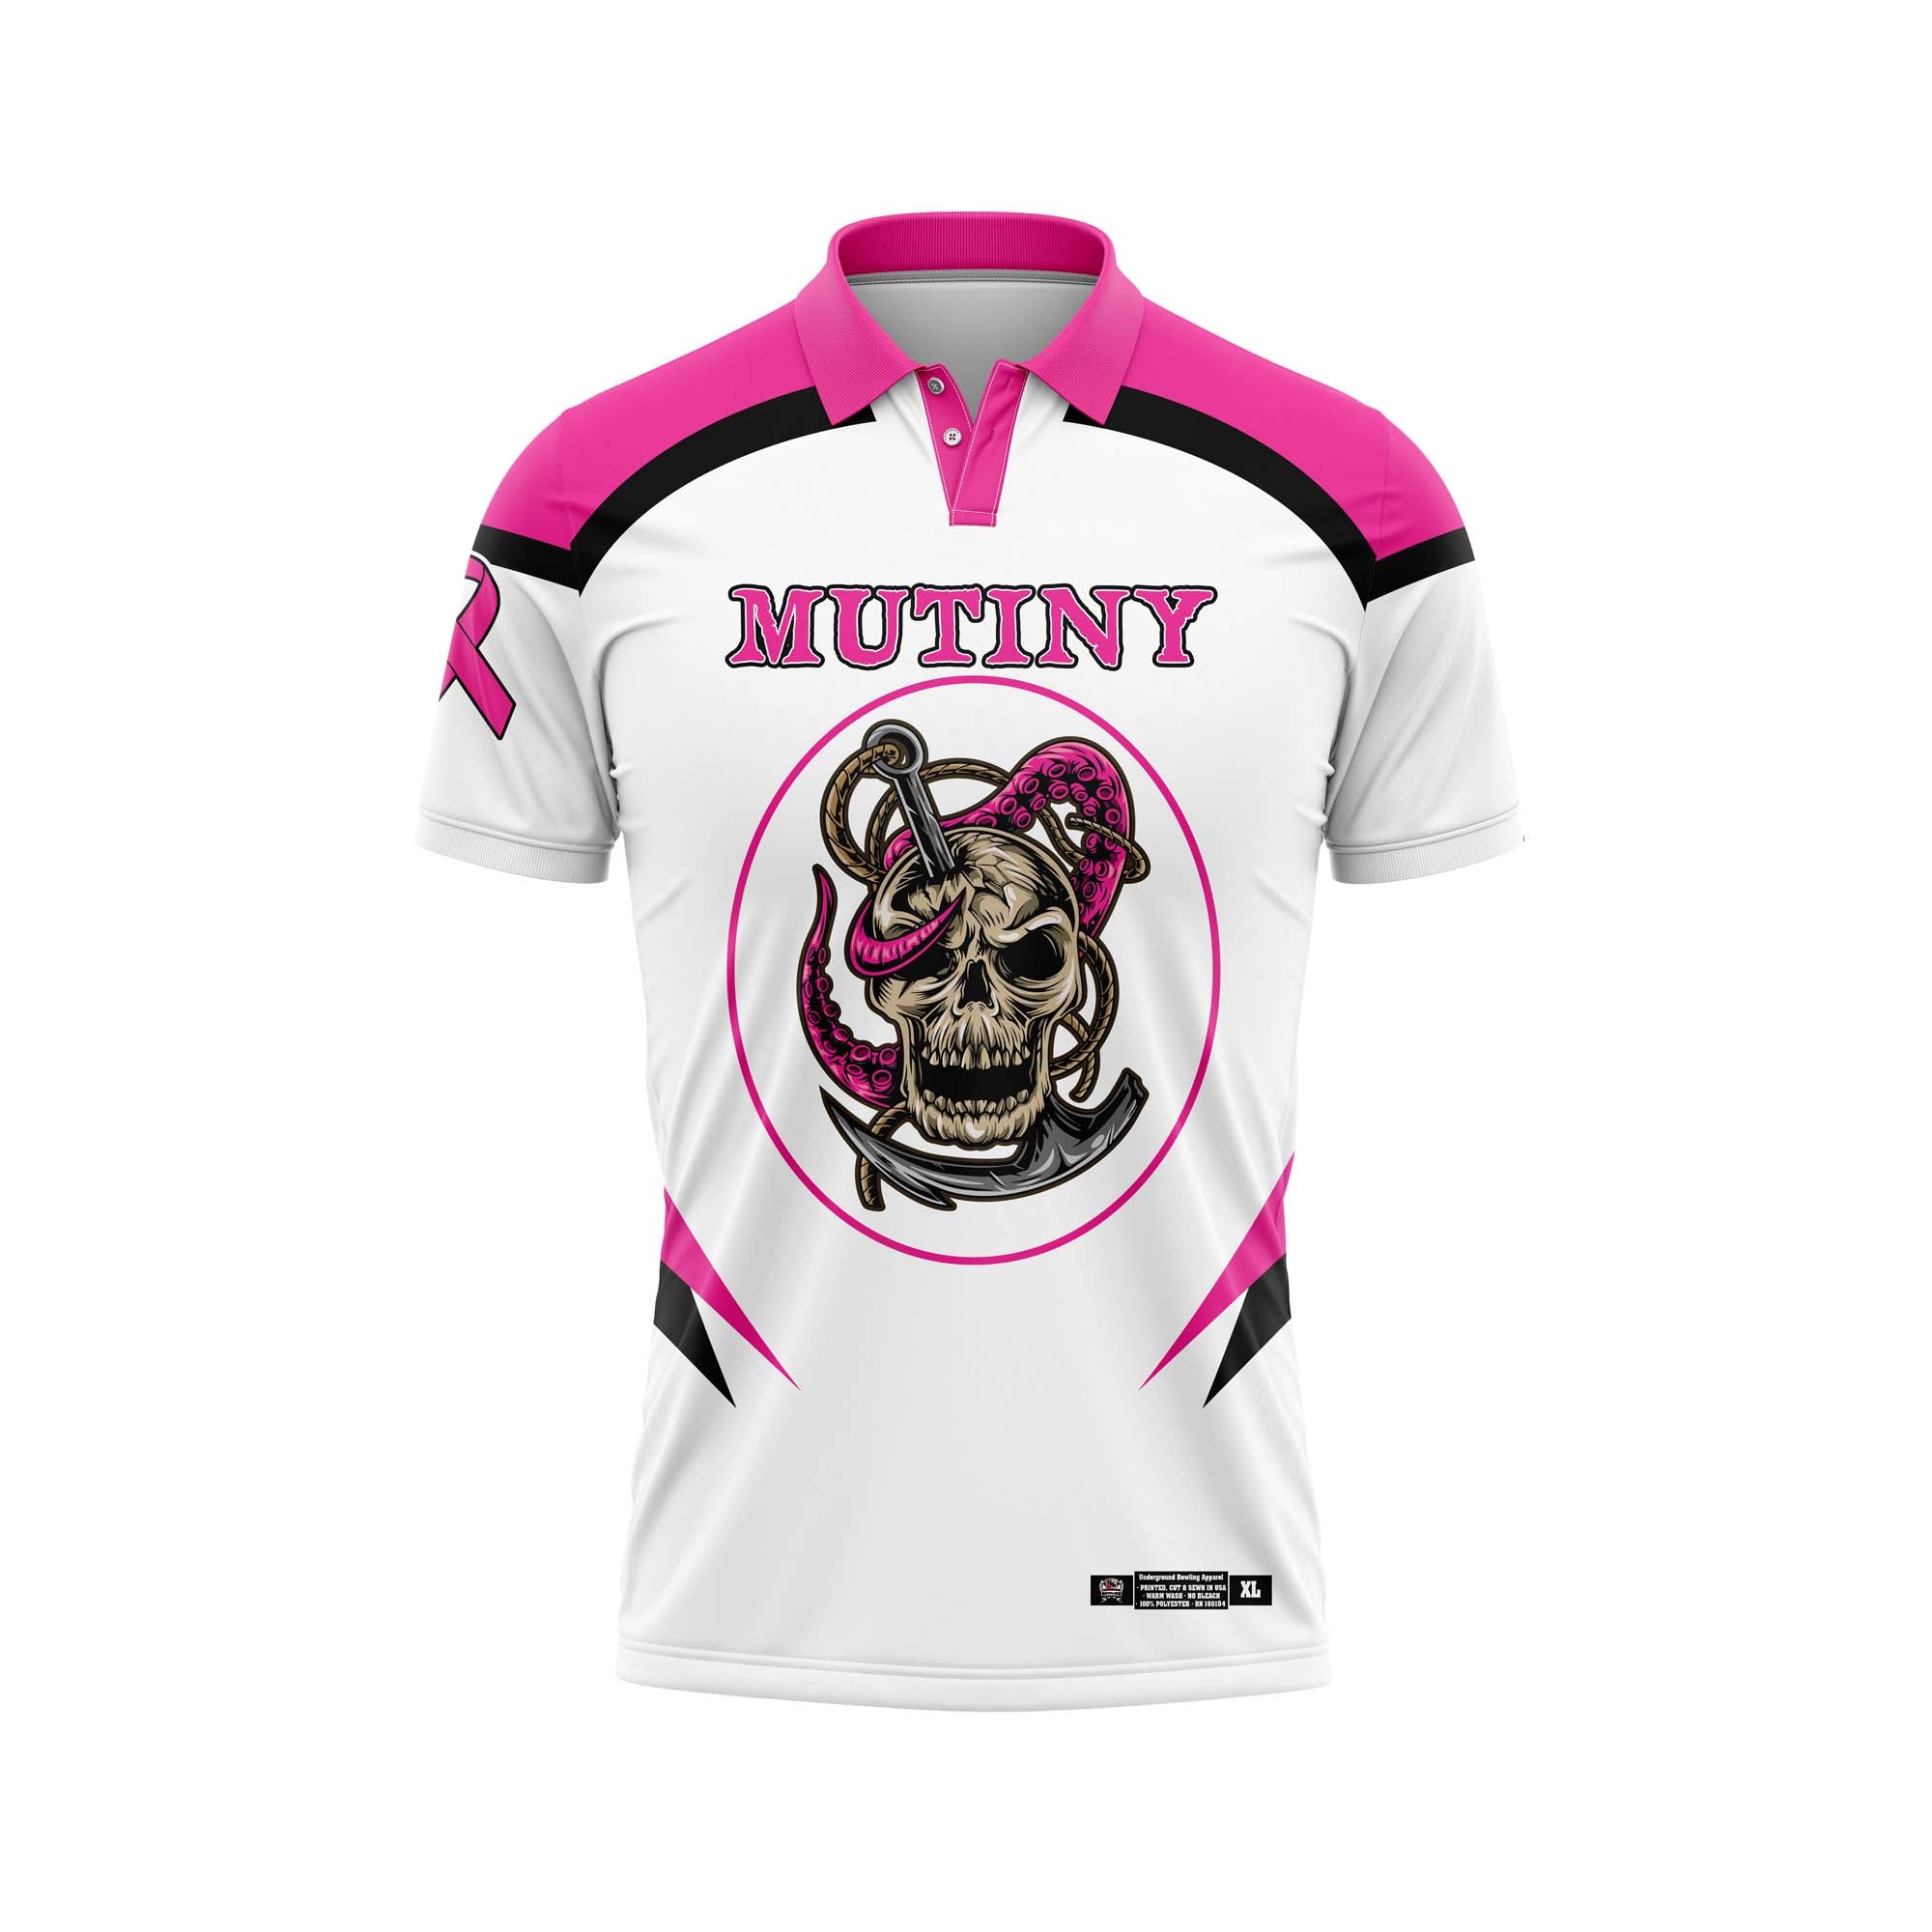 Mutiny Breast Cancer Jersey